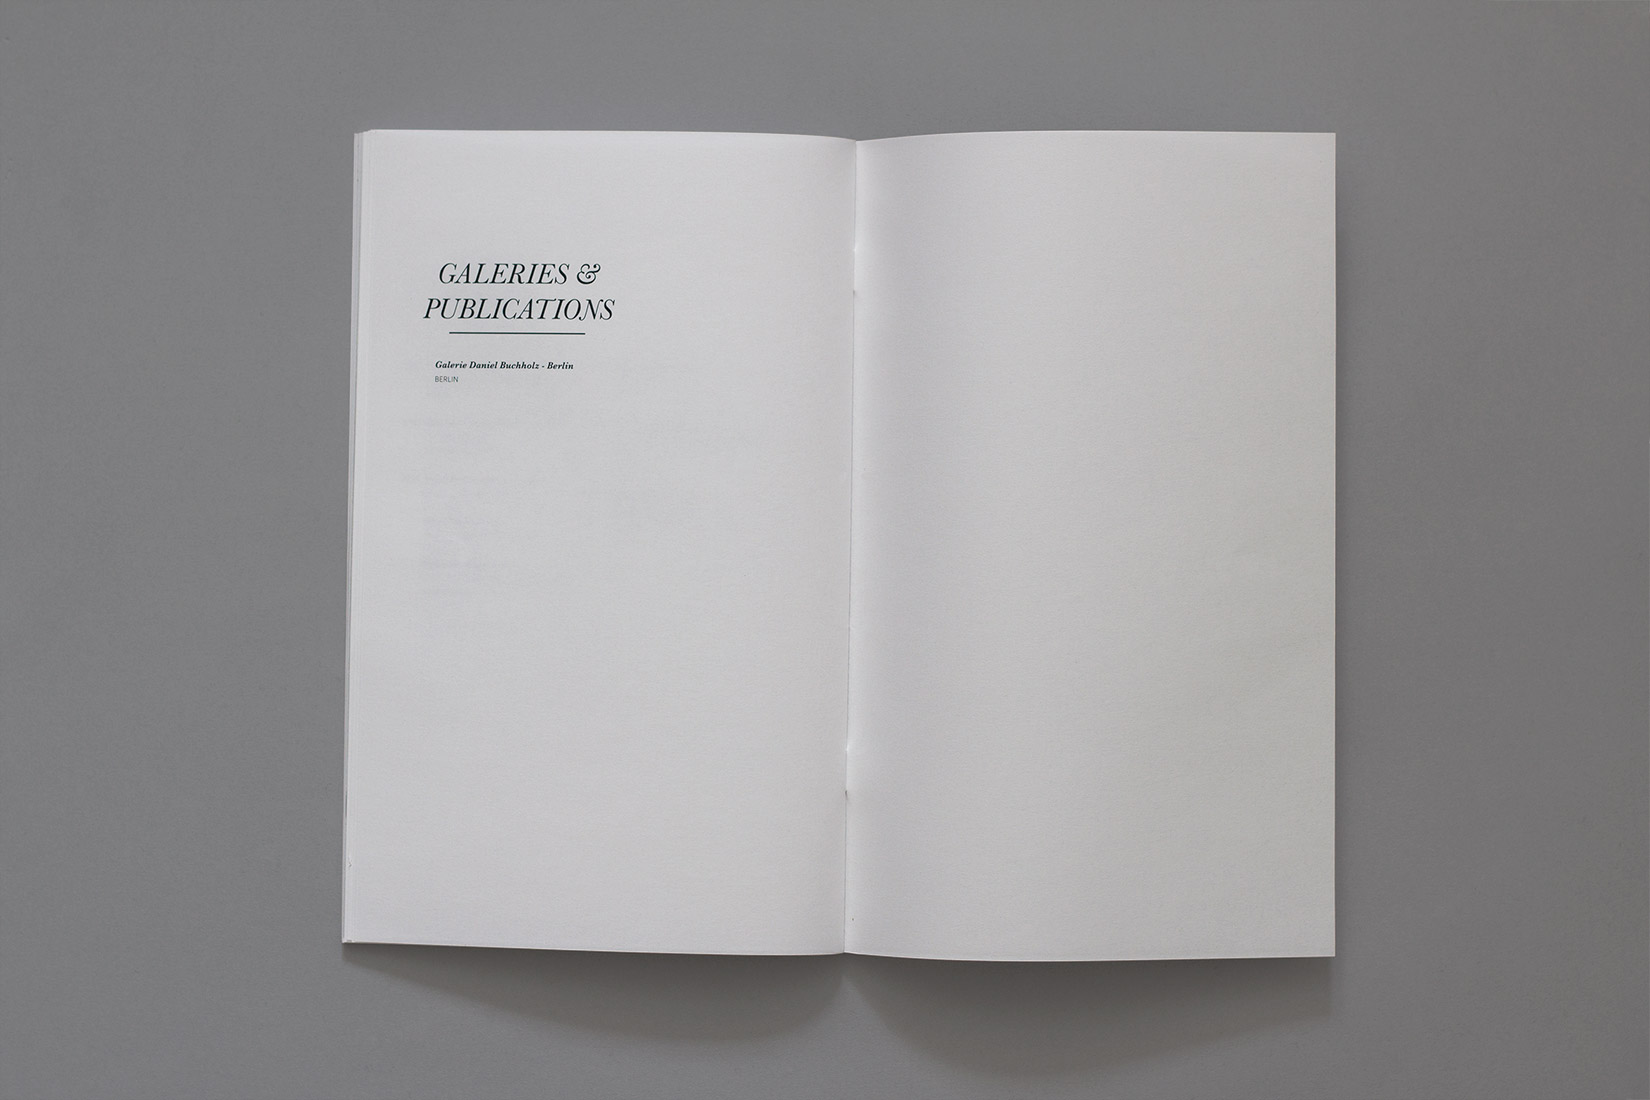 Livre d'artiste, Nairy Baghramian, Galeries & publications